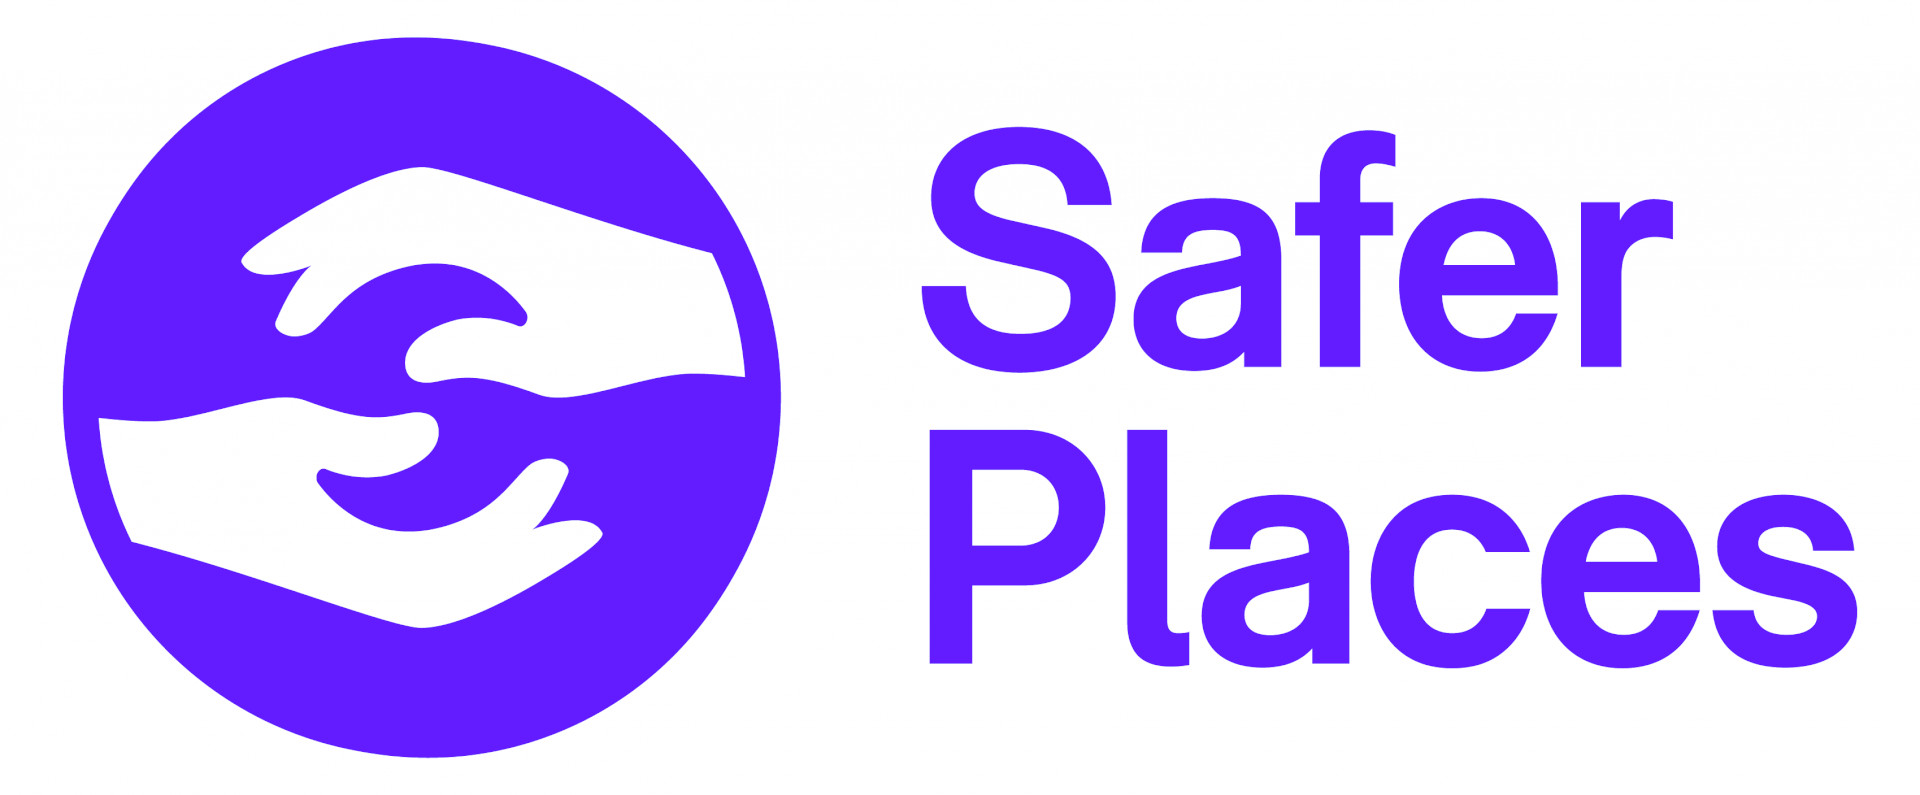 Safer places